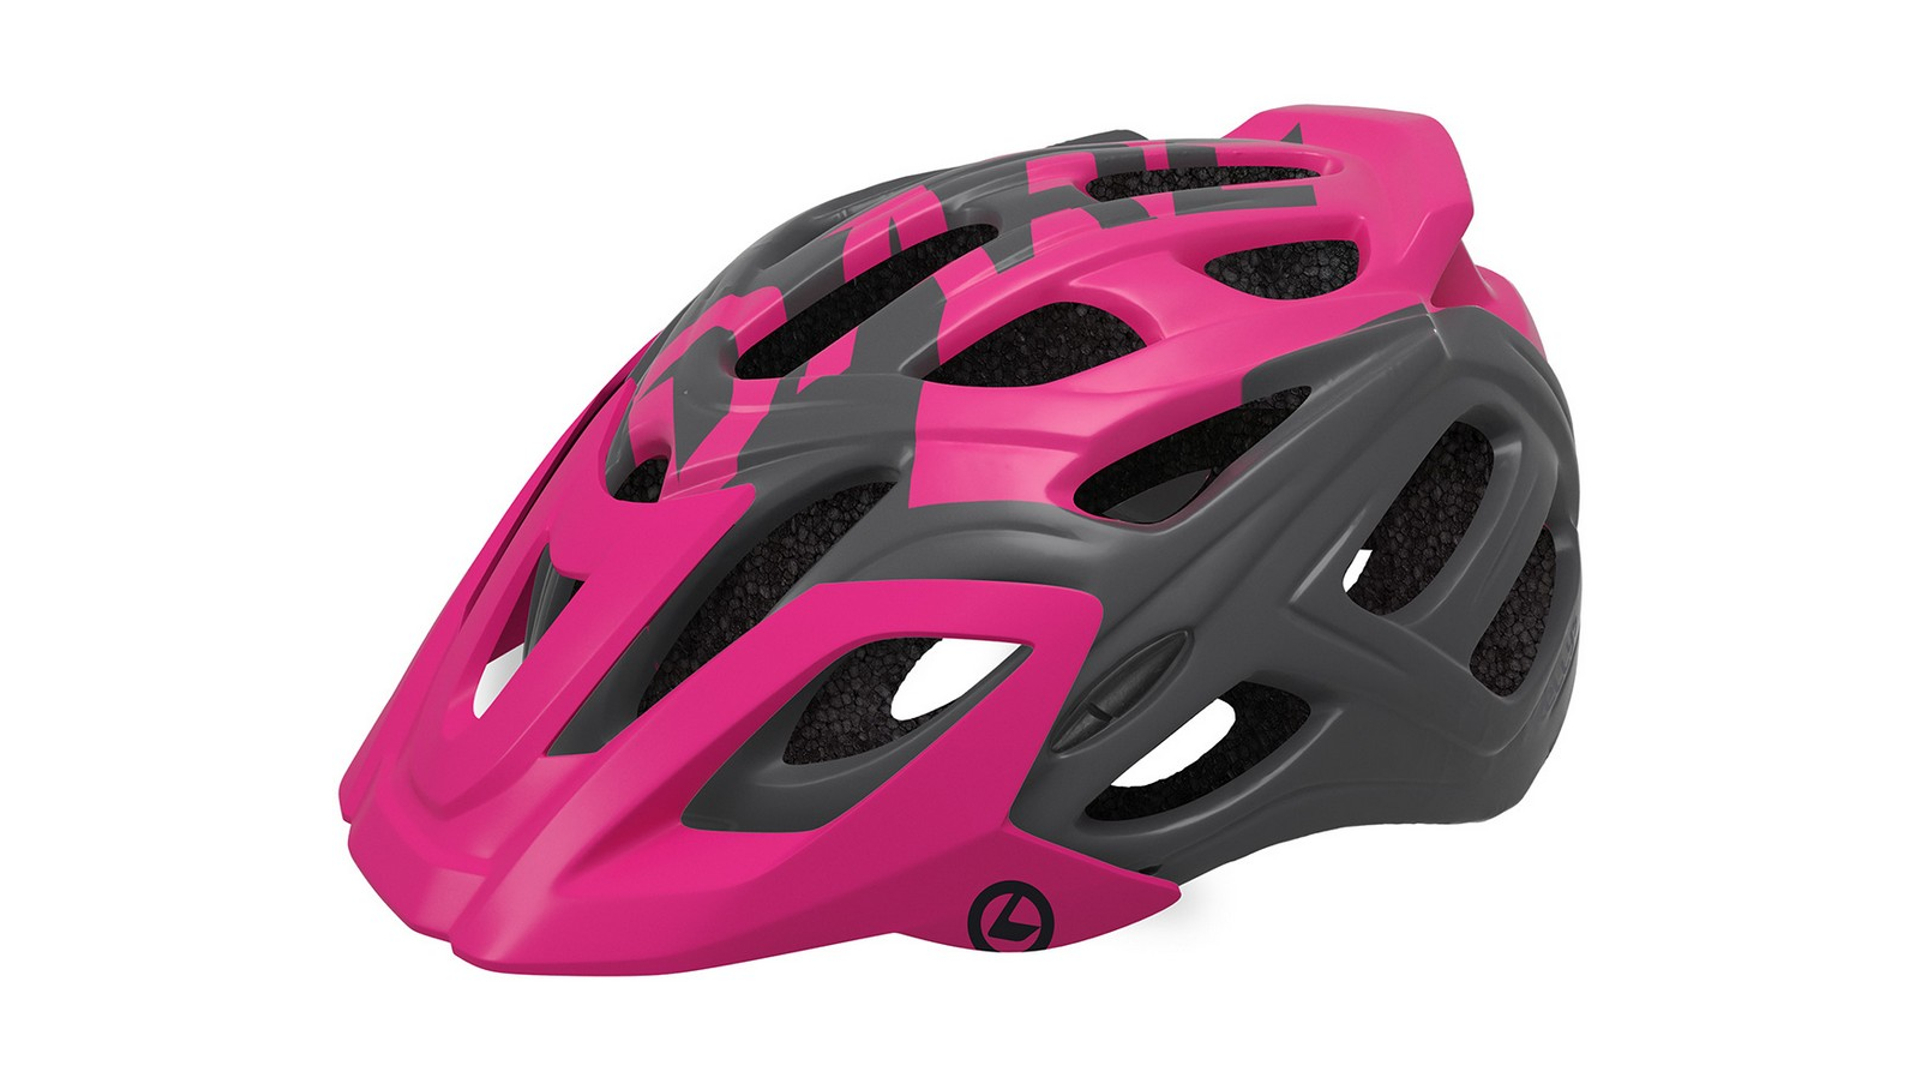 KELLYS Dare all-mountain/trail MTB kerékpáros sisak, pink matt, M/L (58-61cm)